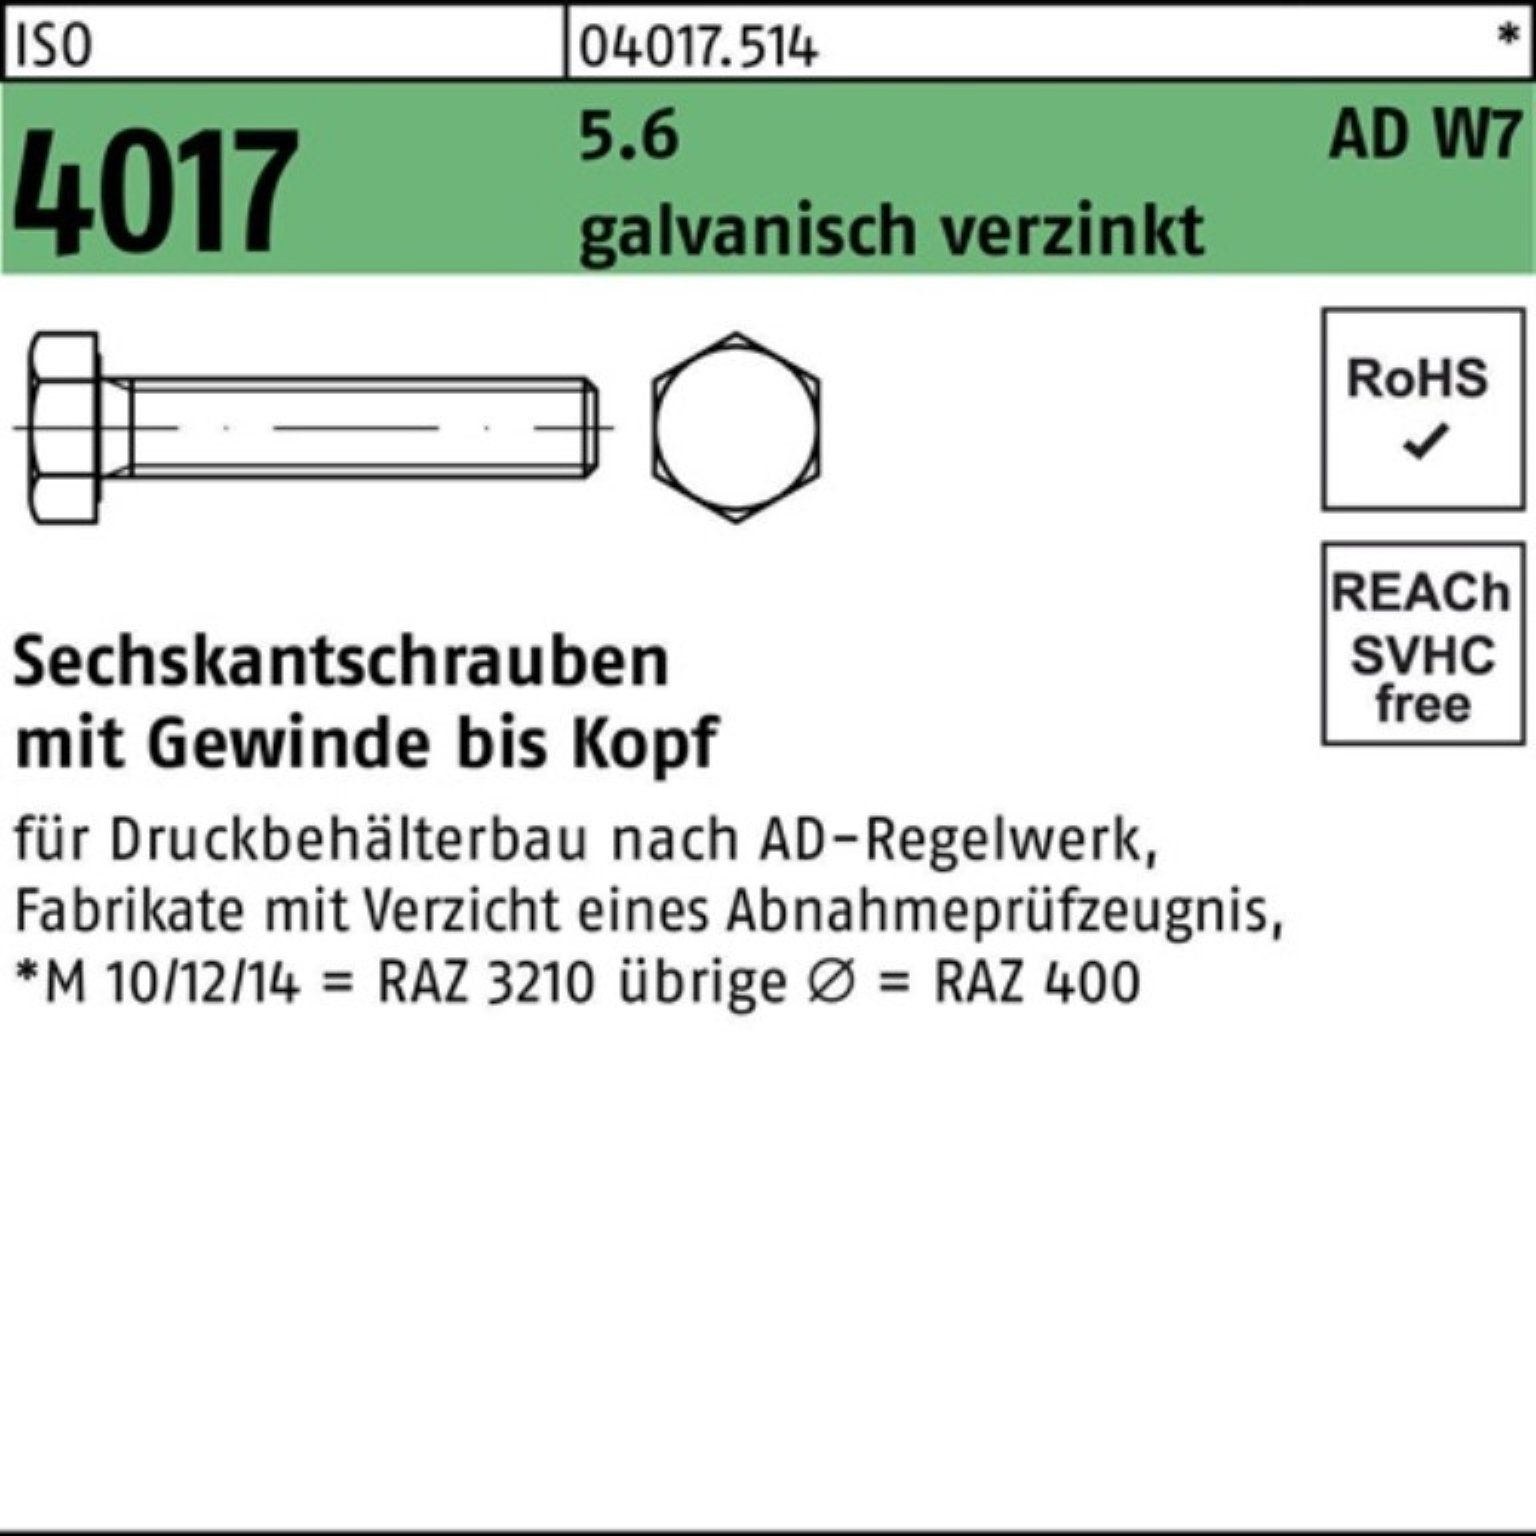 Bufab Sechskantschraube 4017 200 Sechskantschraube 100er M20x W7 ISO VG galv.verz. Pack AD 5.6